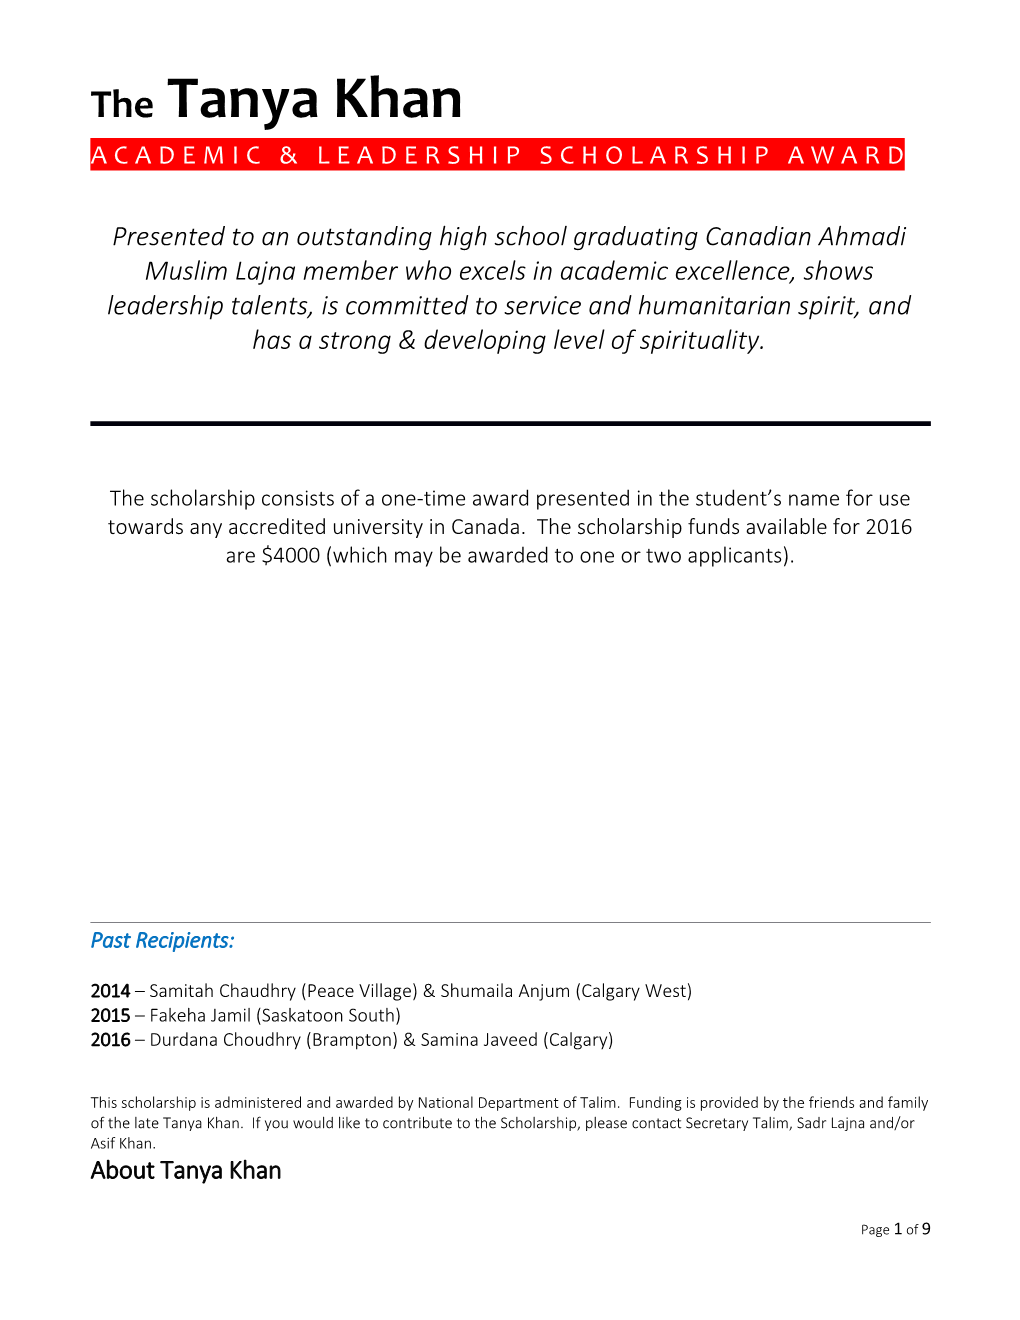 Academic & Leadership Scholarship Award